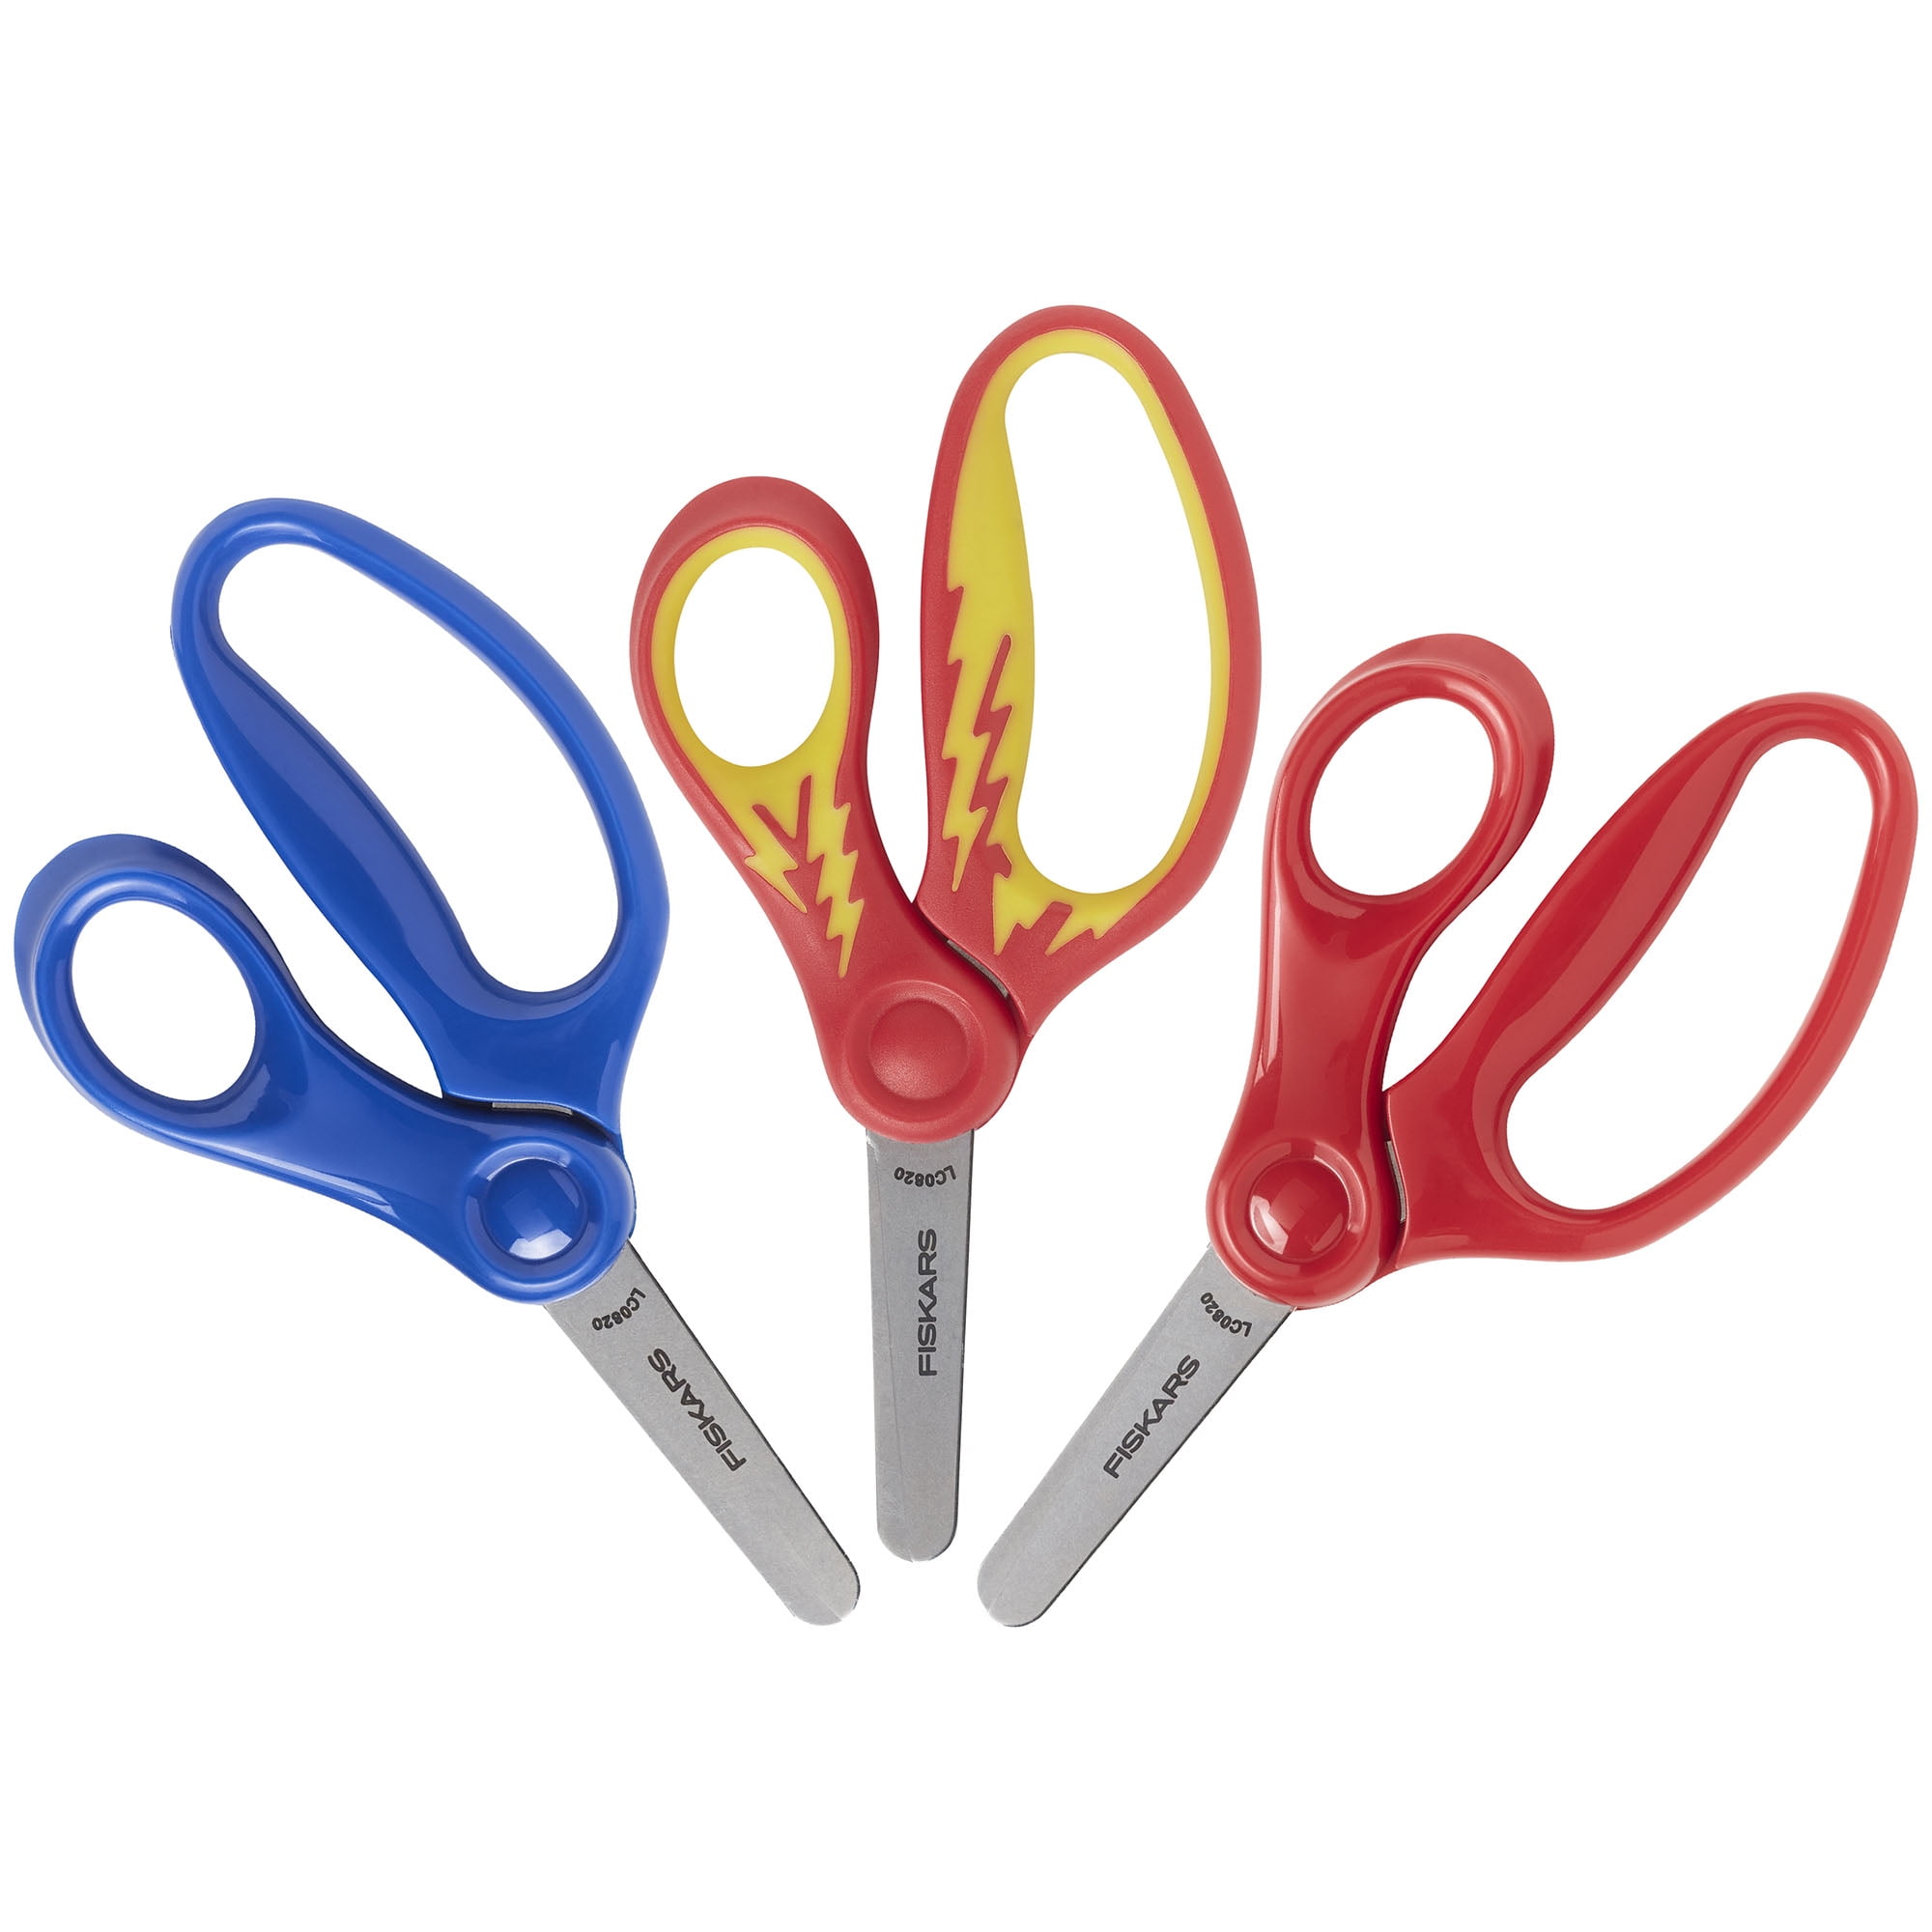 Fiskars • Blunt-tip Kids Scissors Red for +6 years old